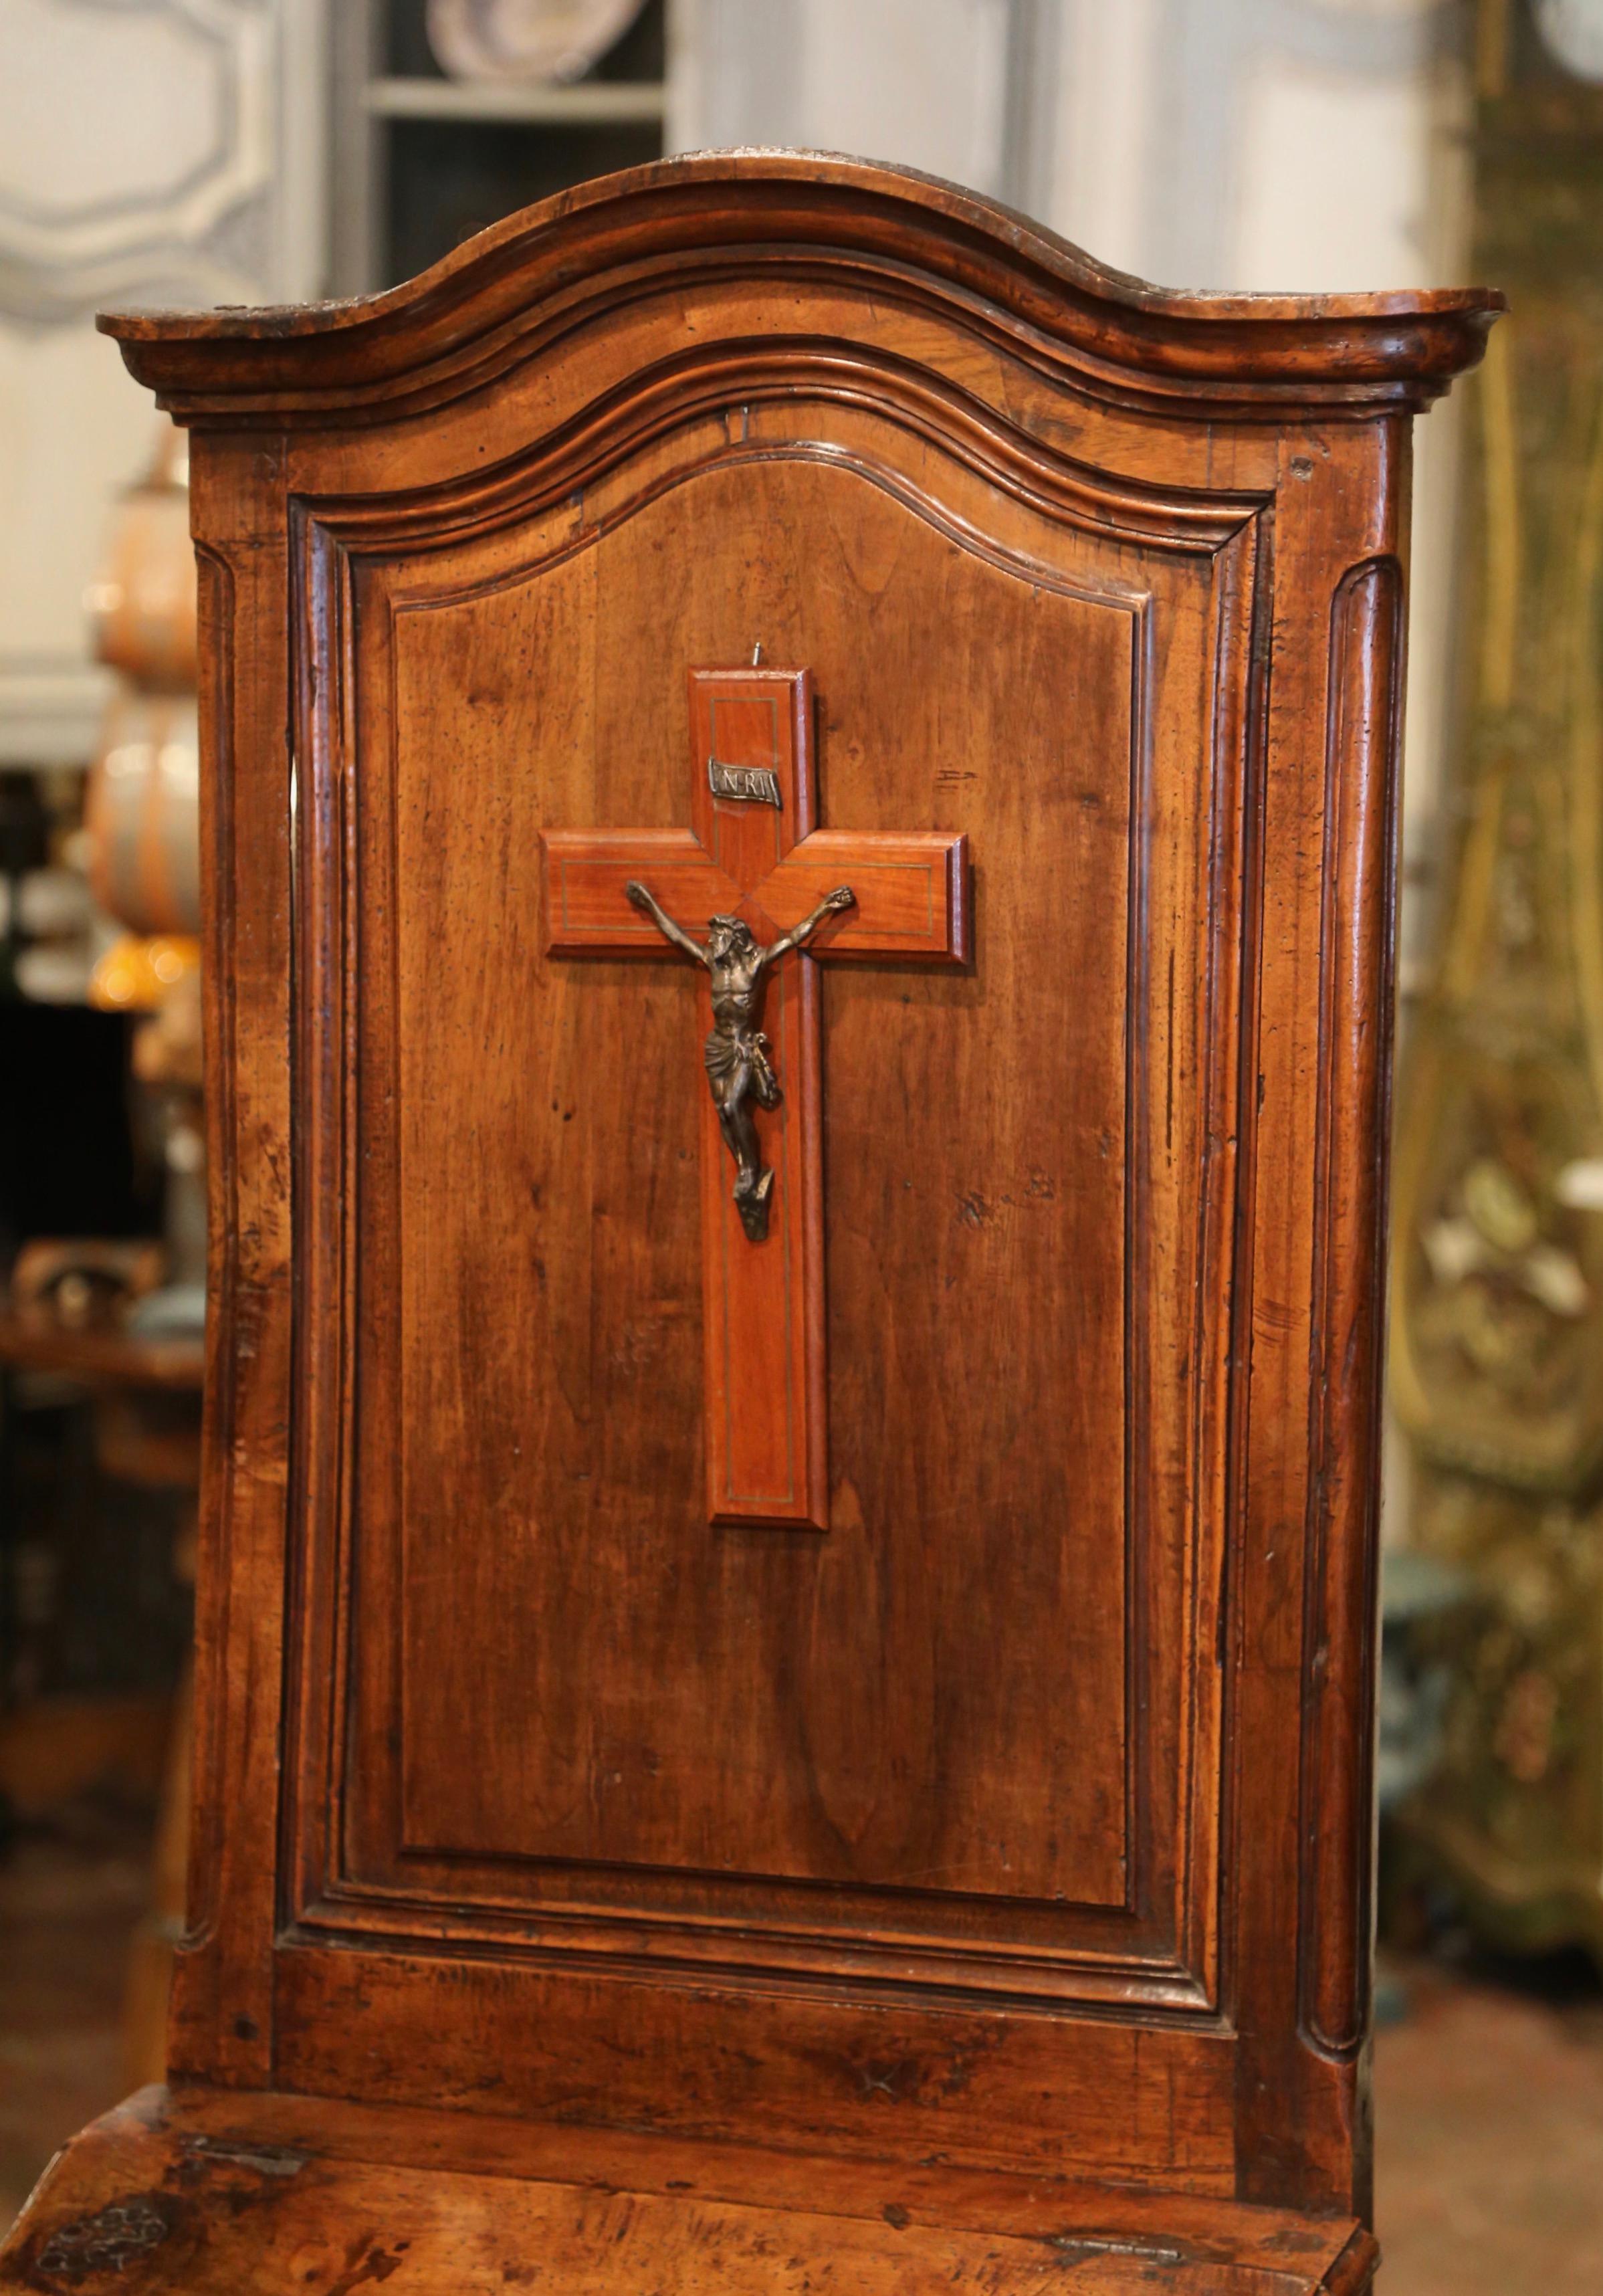 Louis XIV 18th Century French Carved Walnut Oratoire Prayer Kneeler Cabinet from Burgundy